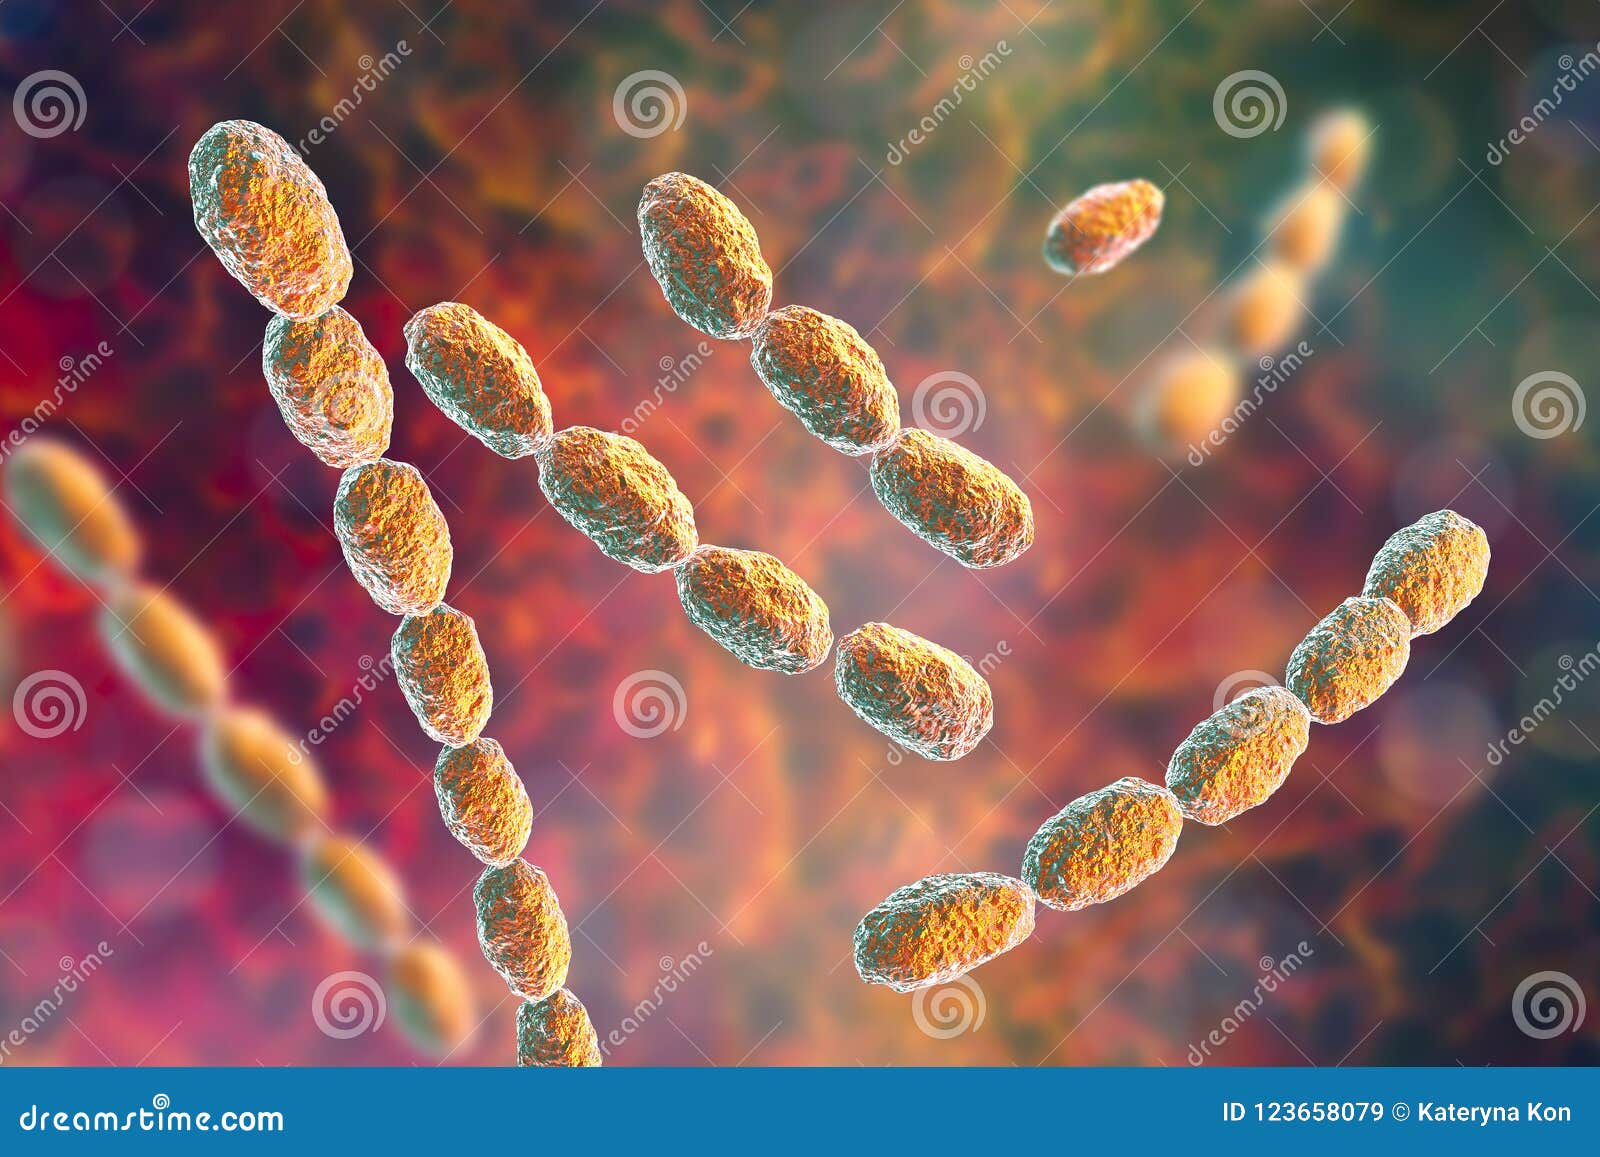 haemophilus ducreyi bacteria